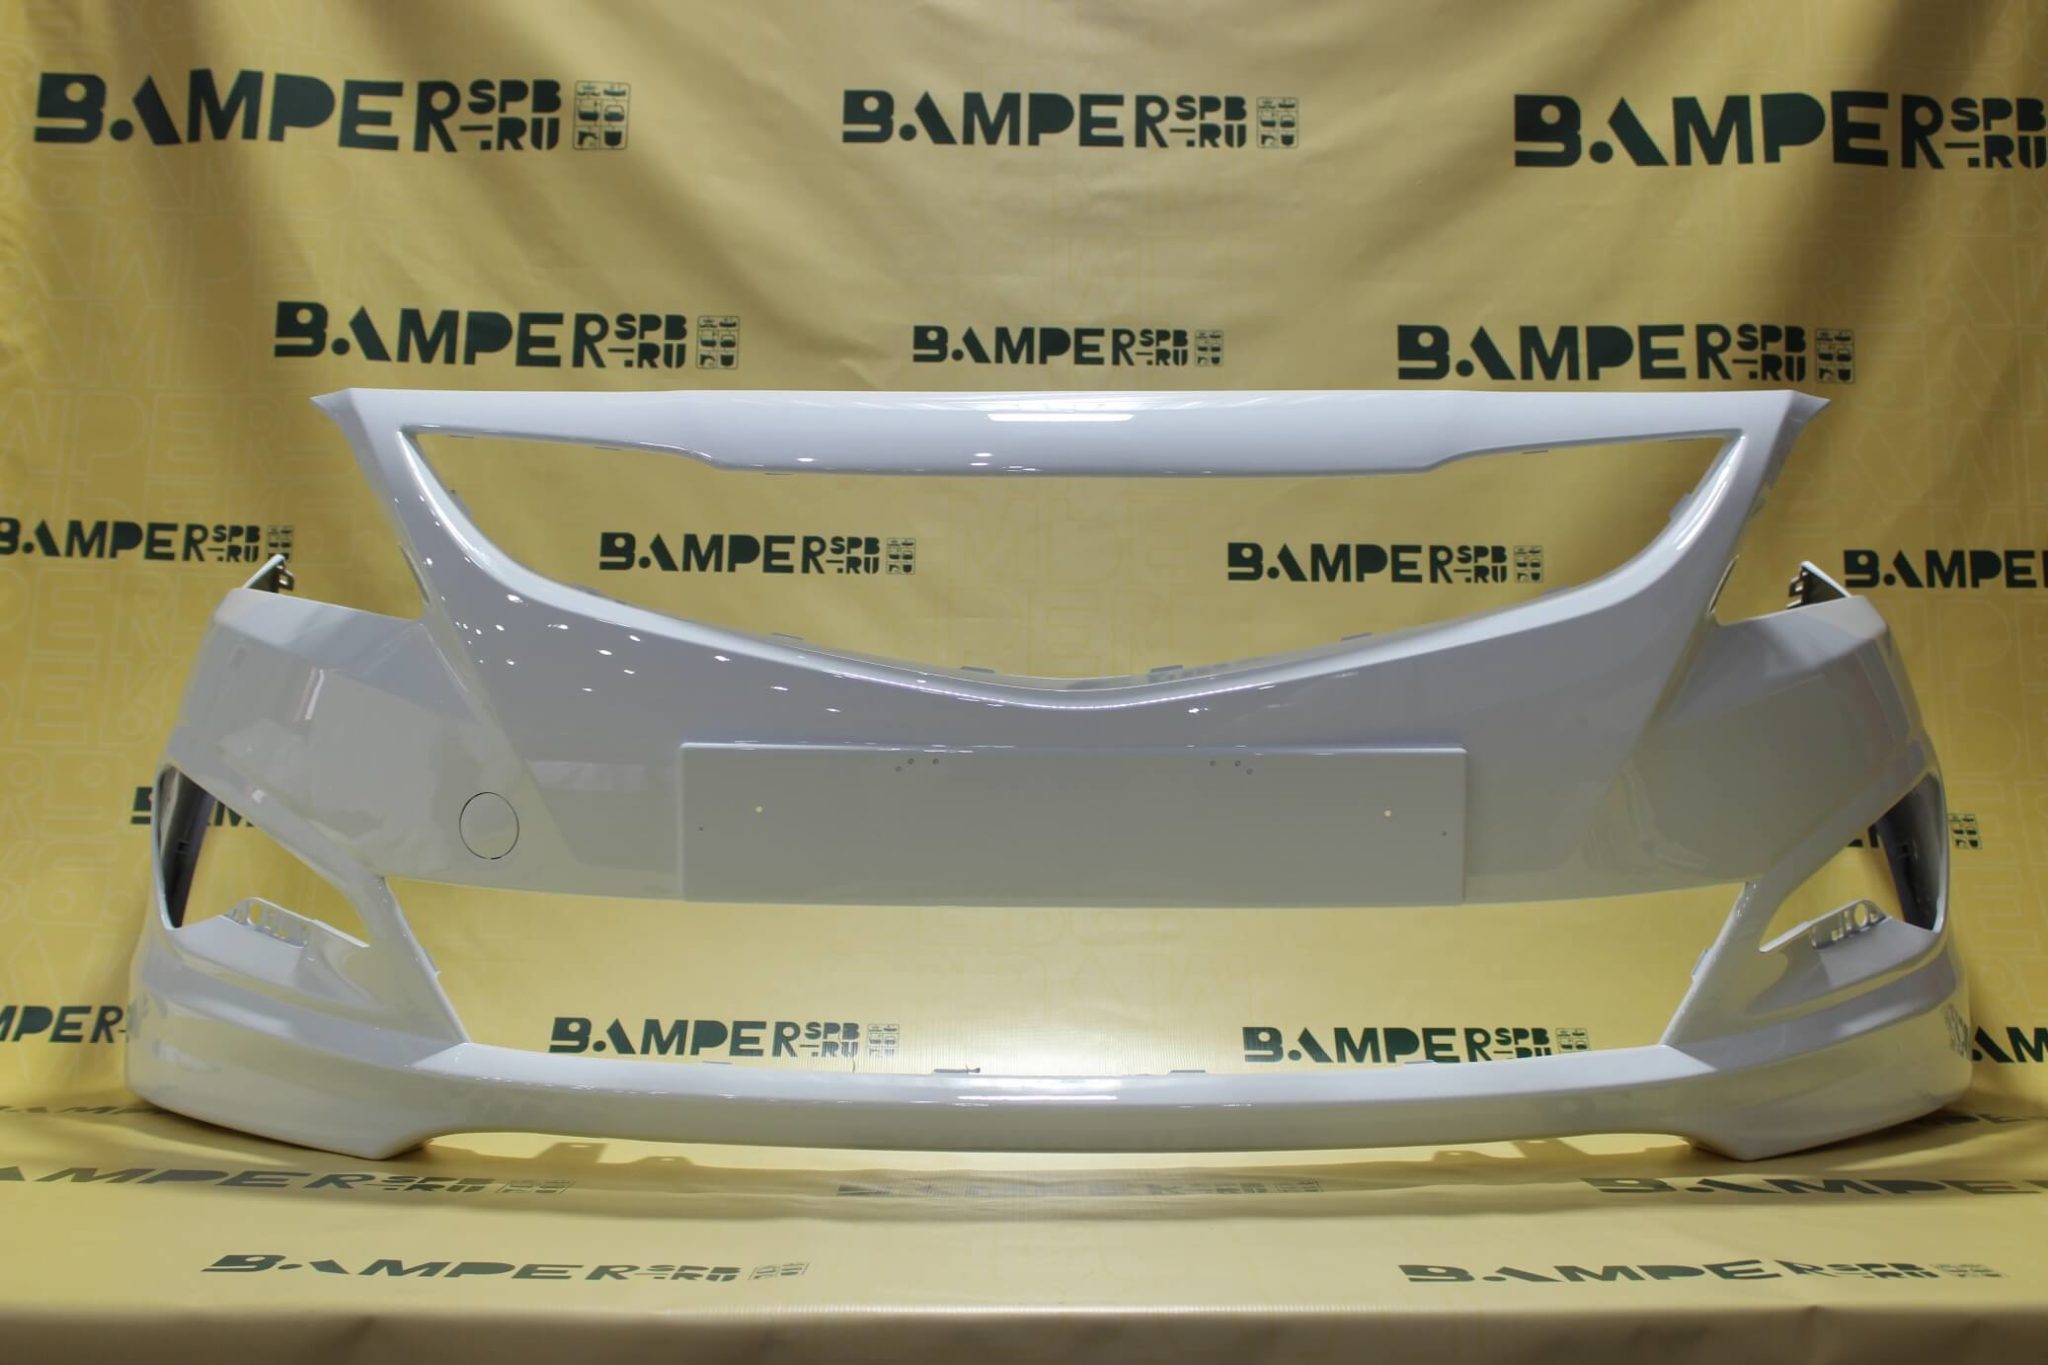 Бампер передний Хундай avg 3153903 белый. 8190452 Metaco бампер передний. Бампер Солярис передний. Бампер задний цвет SAE Solaris 2015г. Бампер хендай солярис 2015 год